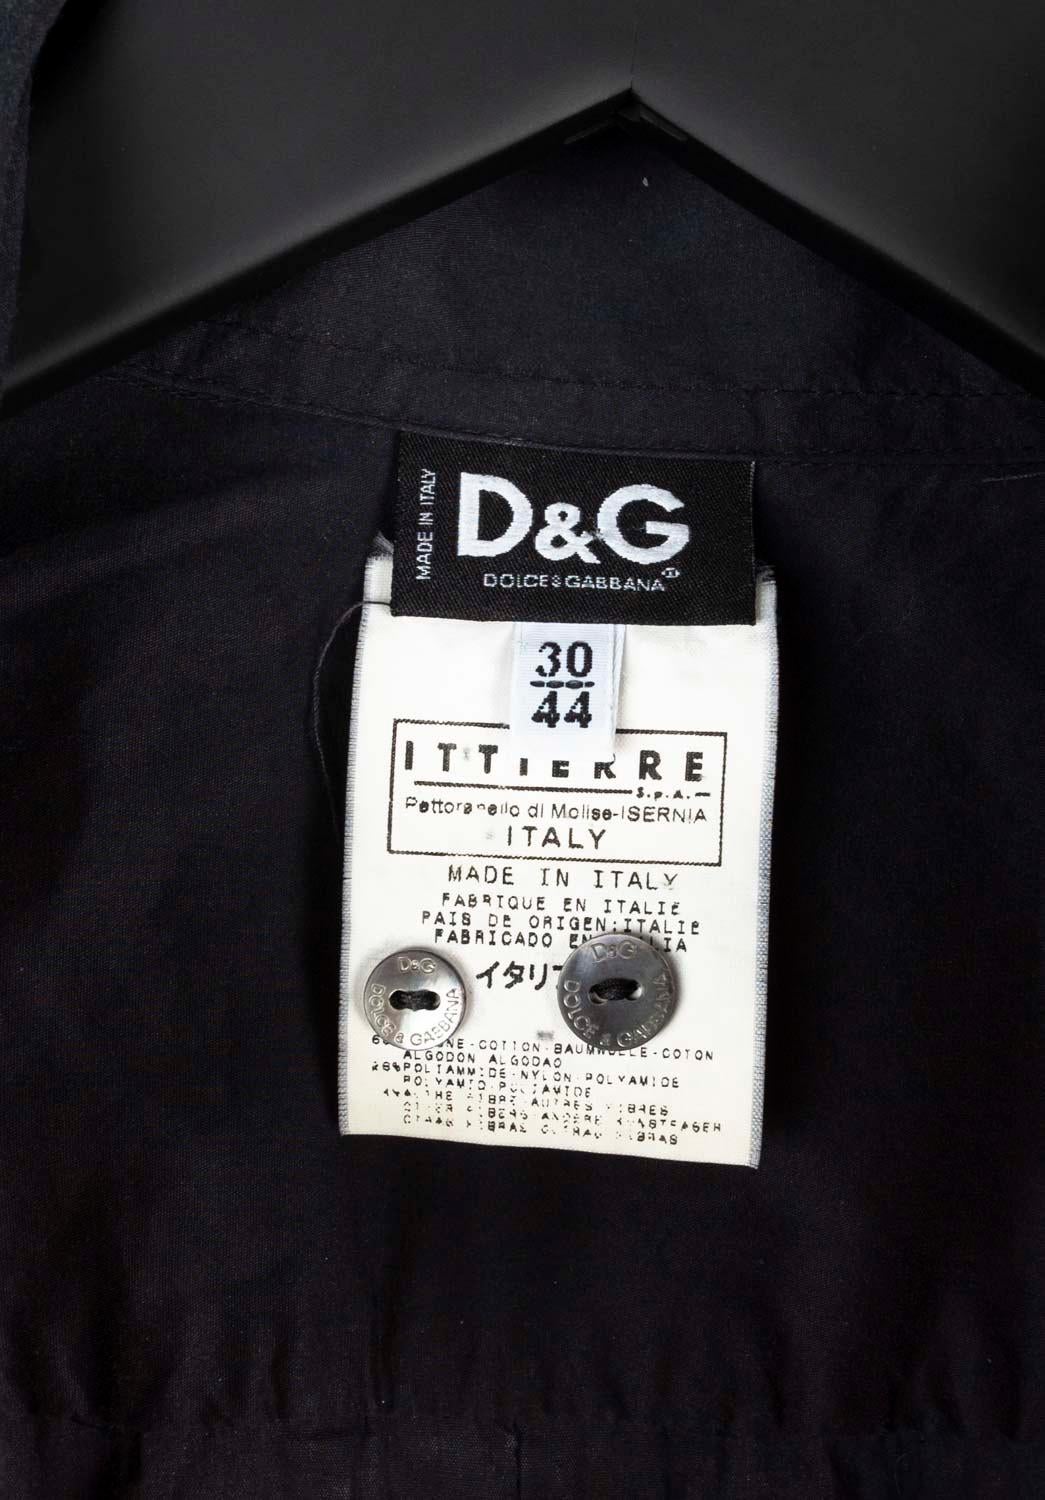 Dolce&Gabbana D&G Men Shirt Runway Vintage Size 30/44 (S/M) For Sale 2